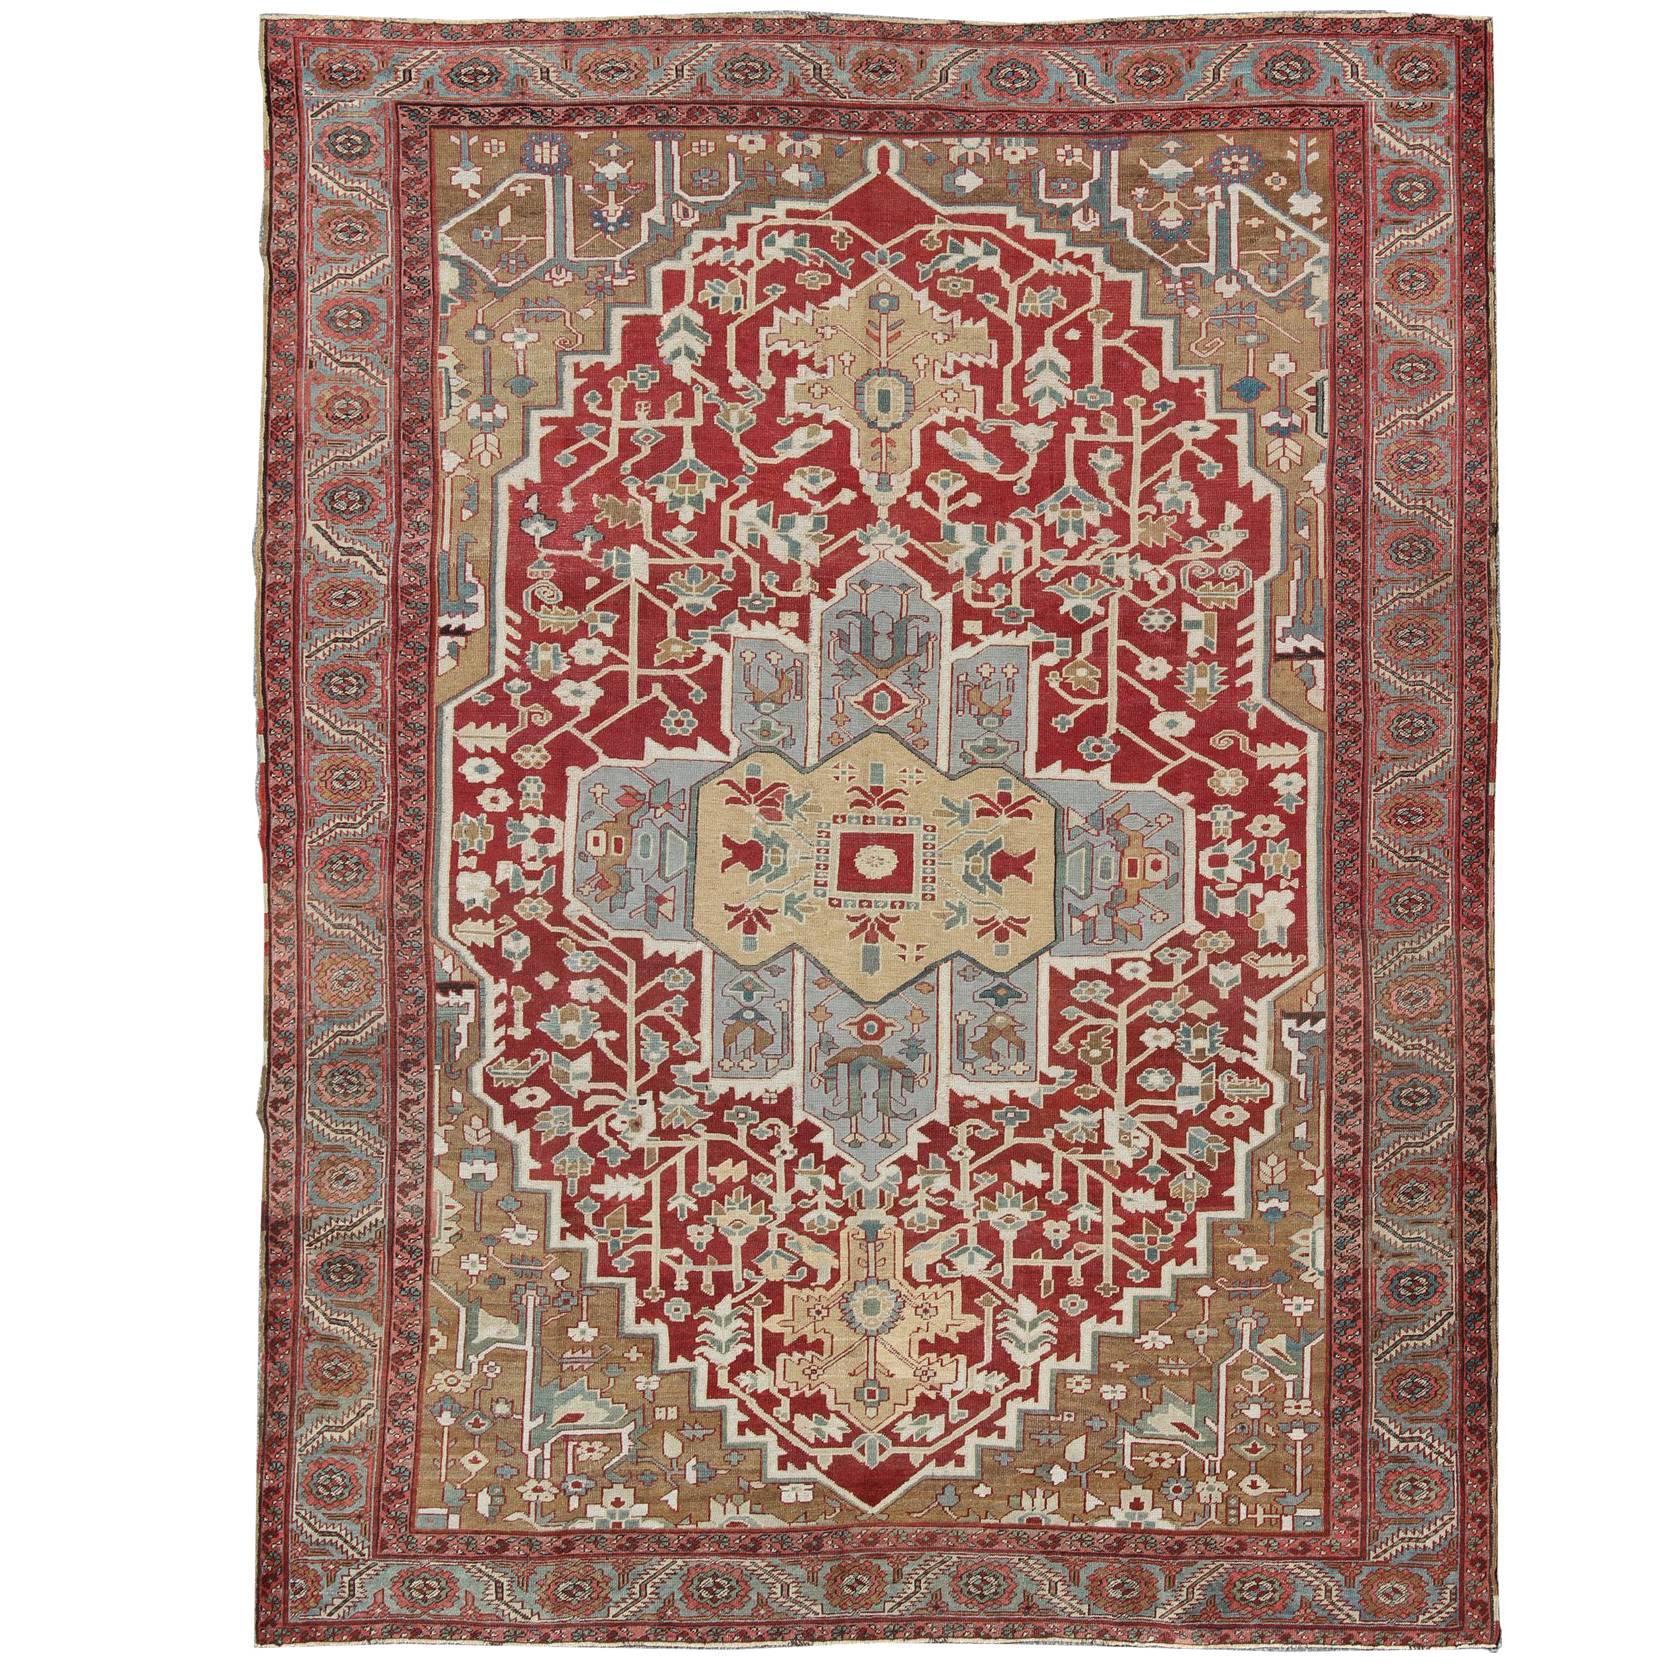 Antique Persian Serapi/Bakhshaiesh Rug in Brick Red, Light Blue & Camel Colors